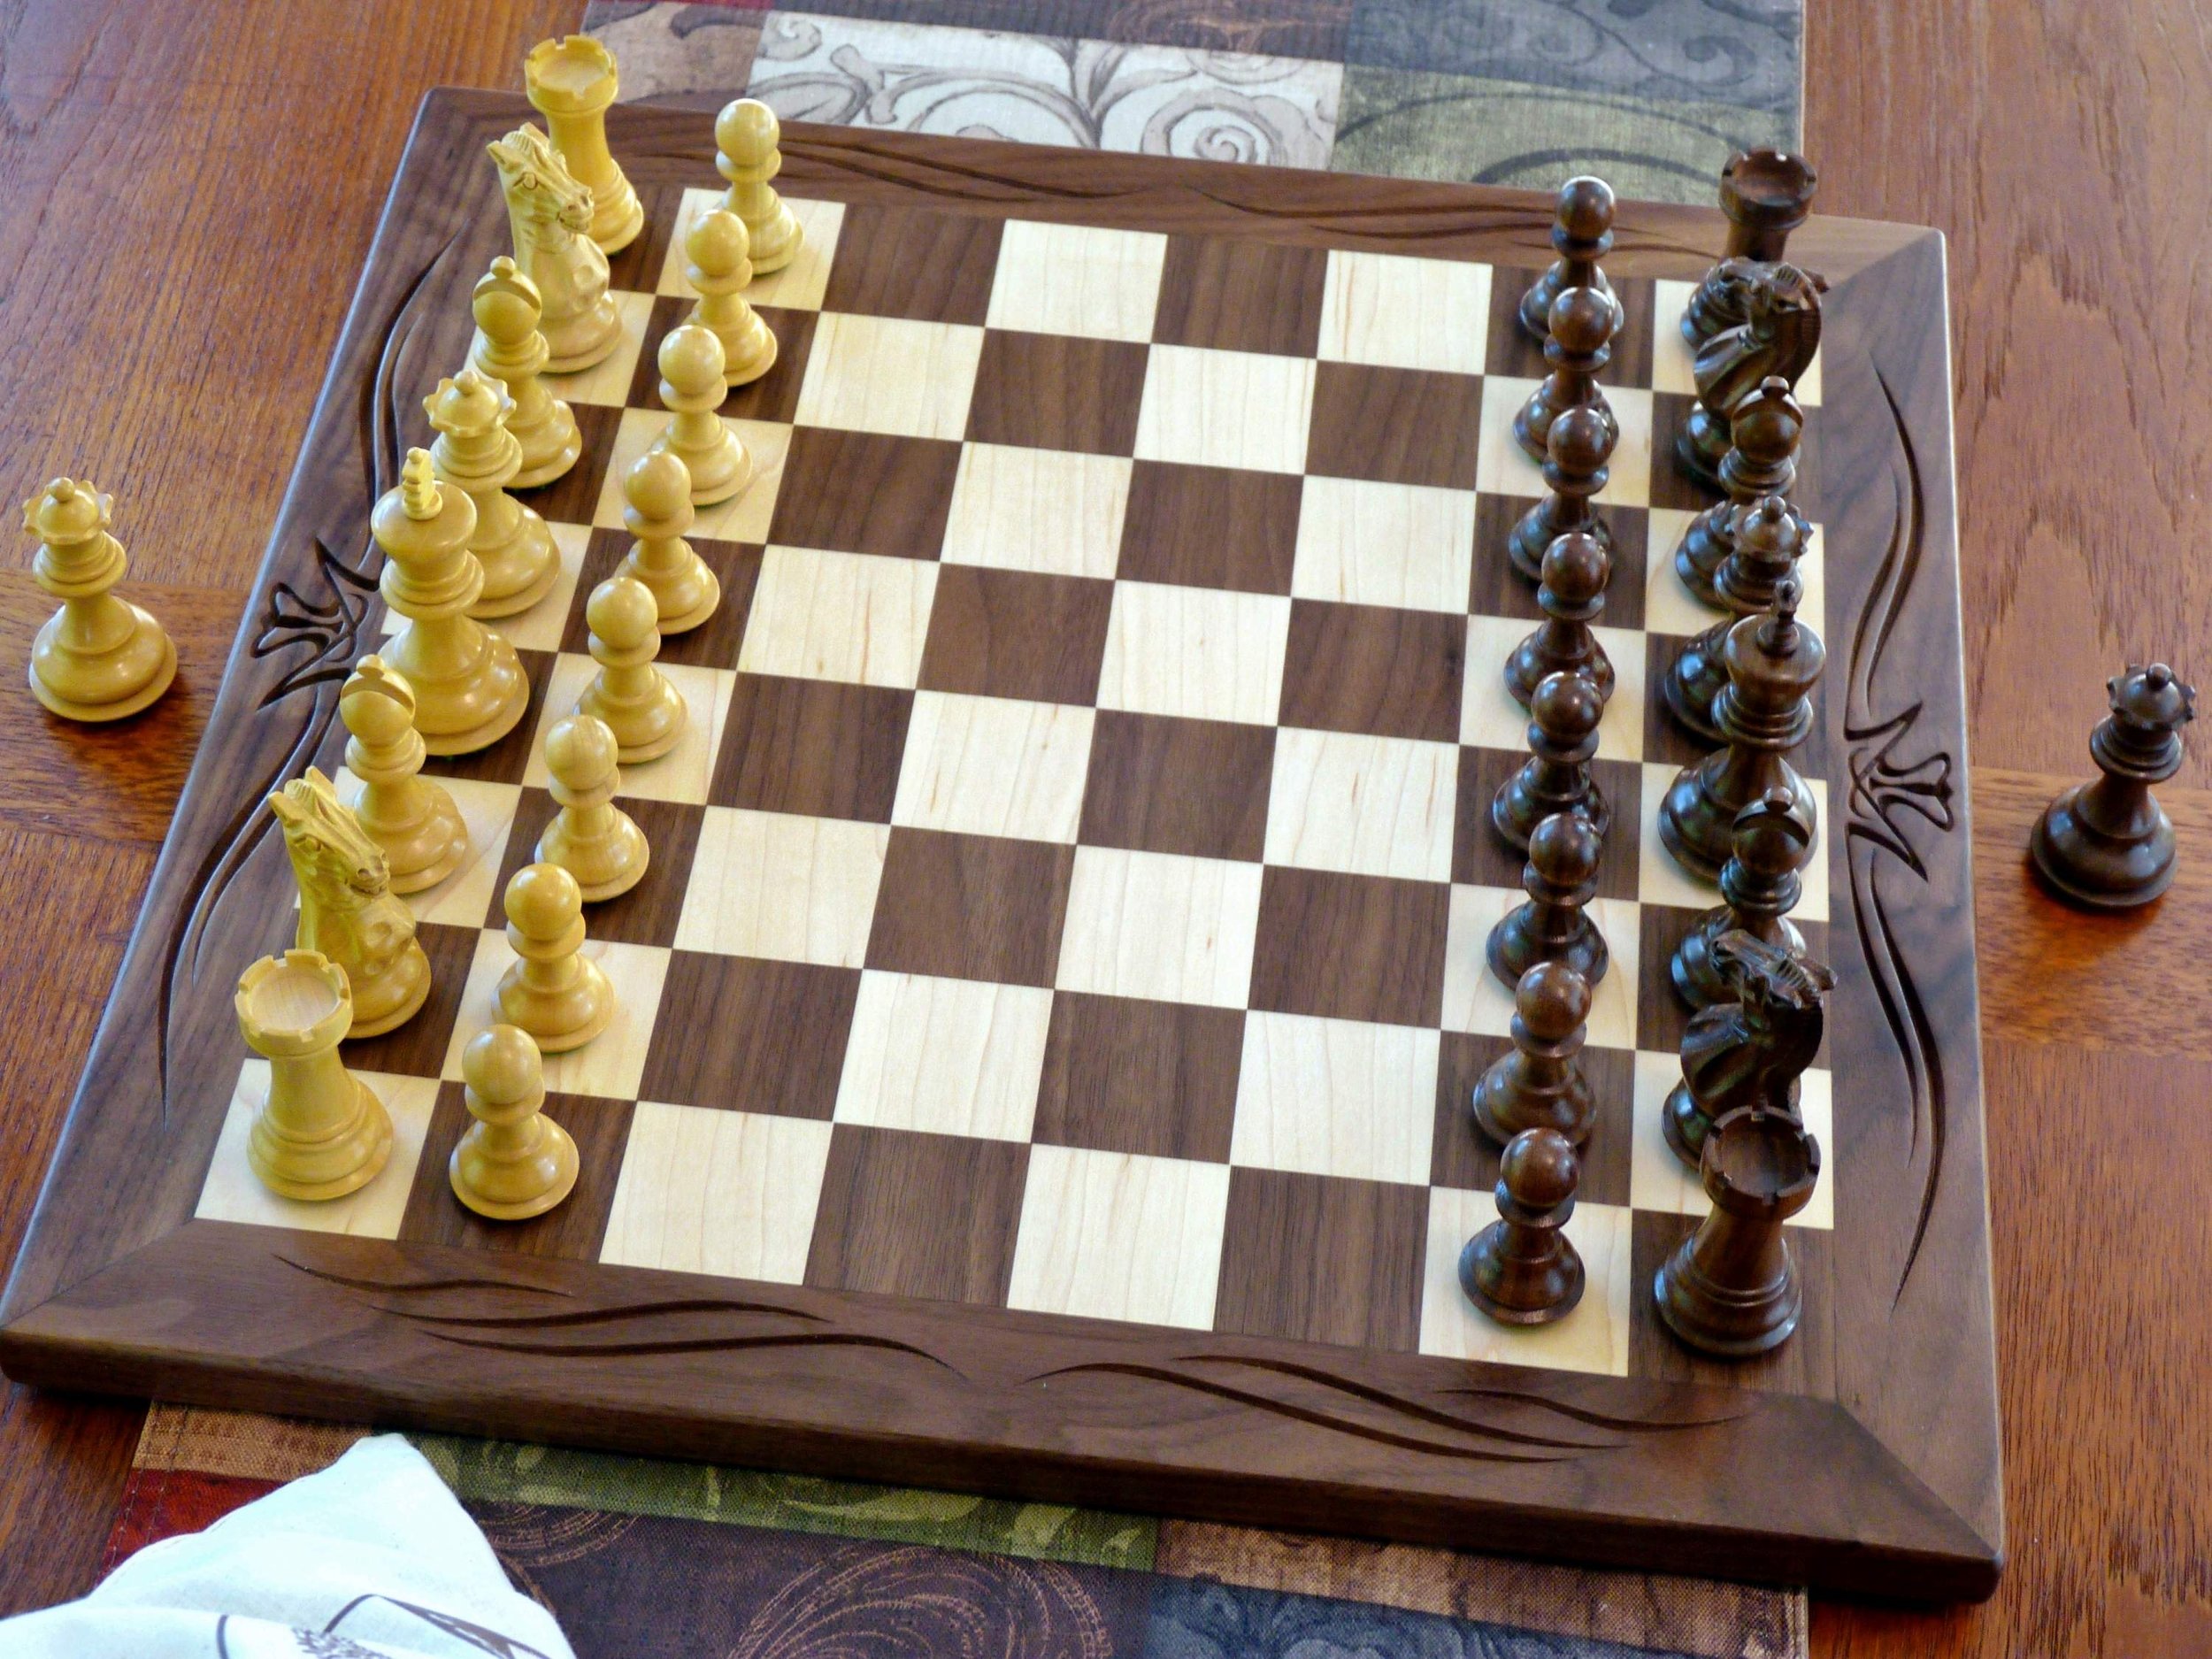 Handmade Chess Board Set made of Wood